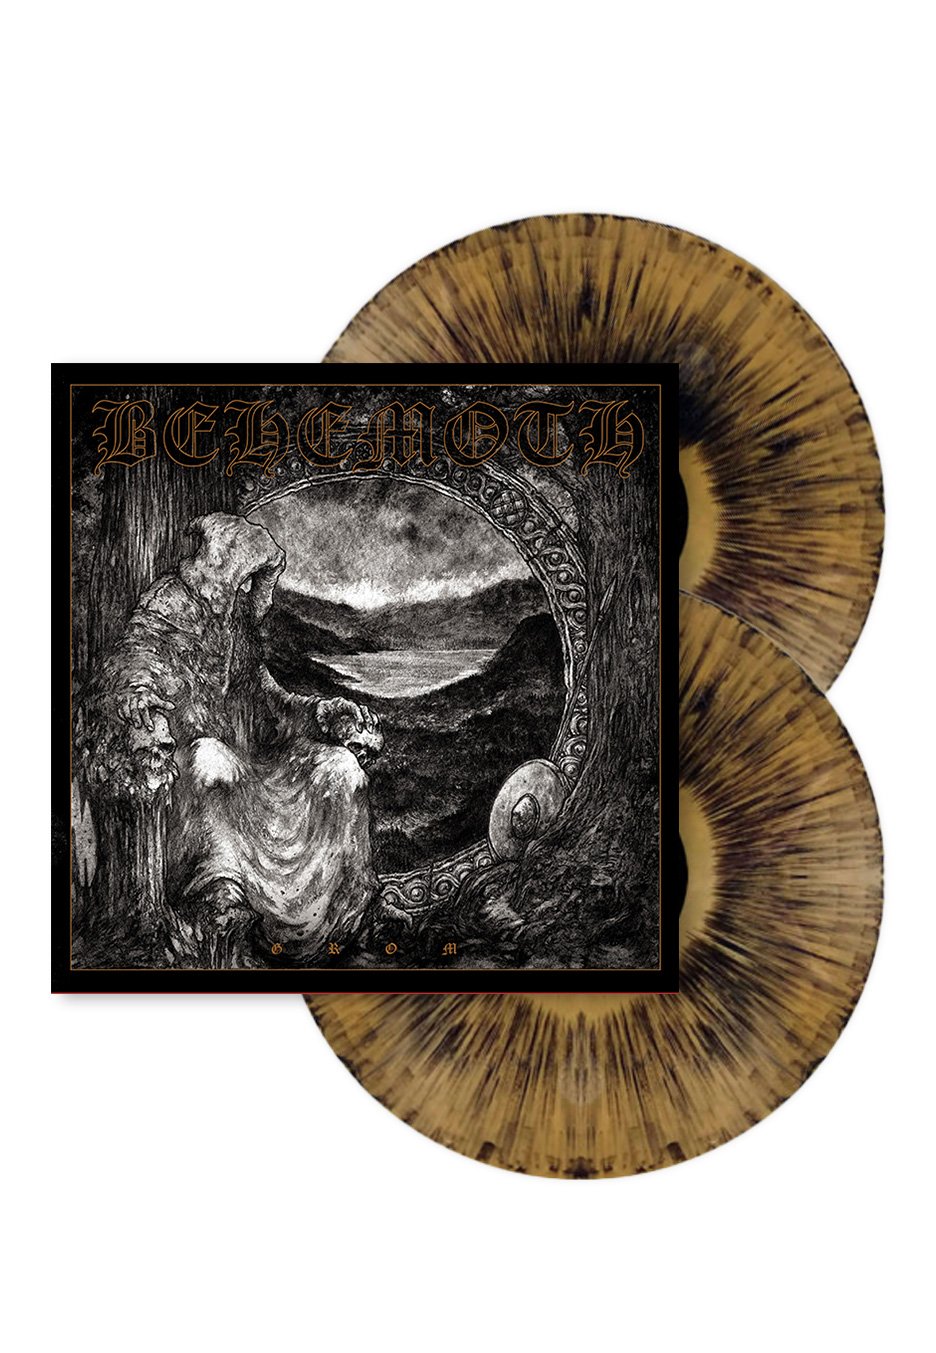 Behemoth - Grom (ReIssue) Ltd. Gold w/ Black Dust - Colored 2 Vinyl